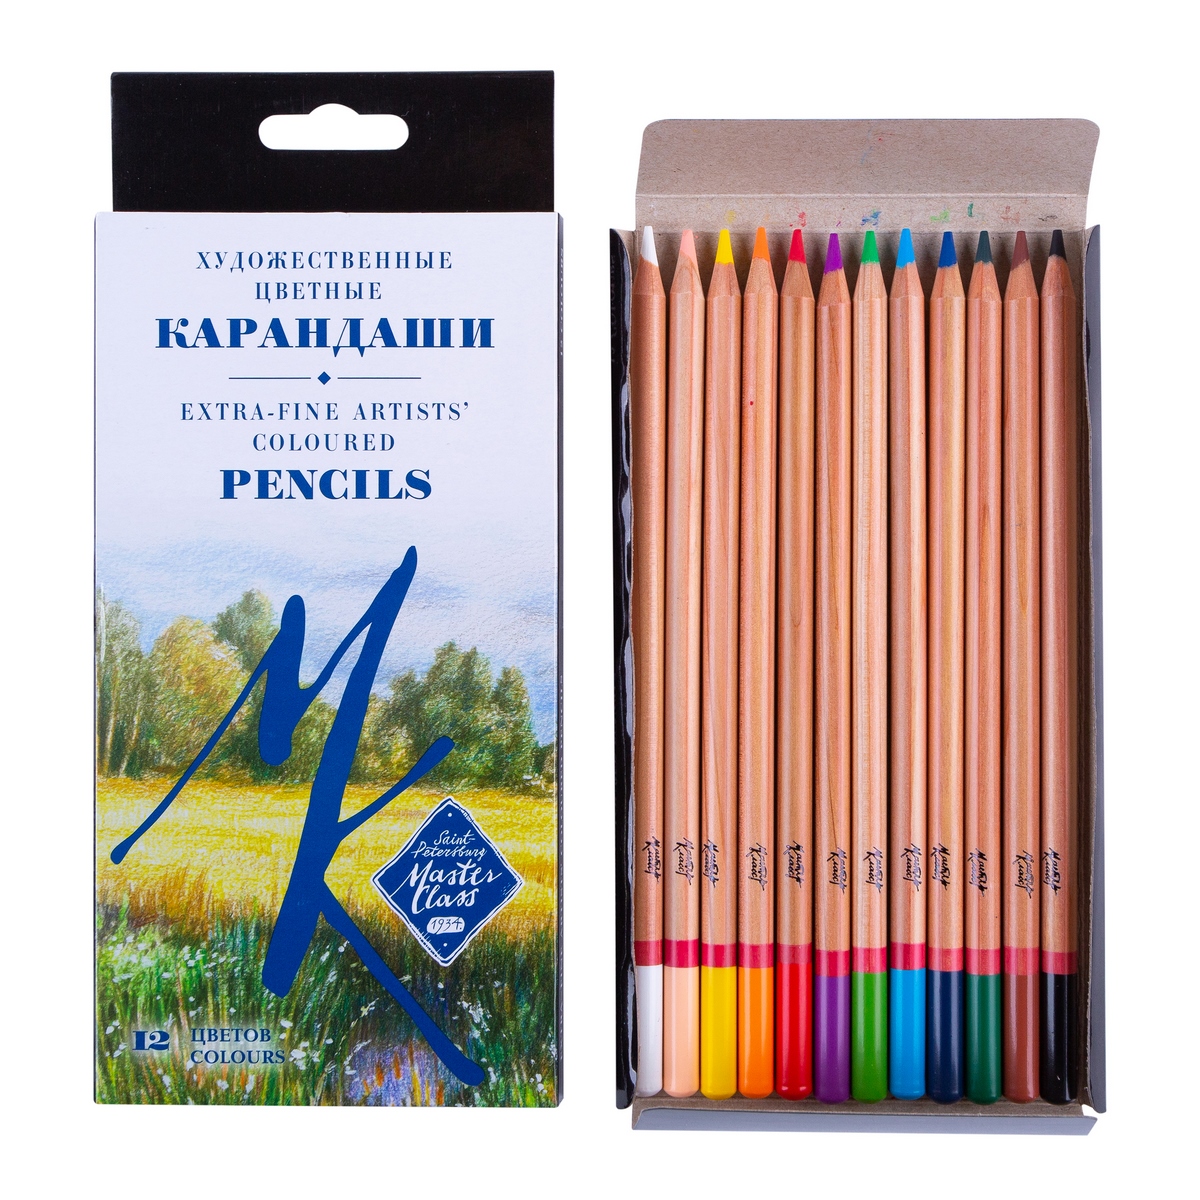 Extra-fine artists' coloured pencils "Master Class" set, carton box